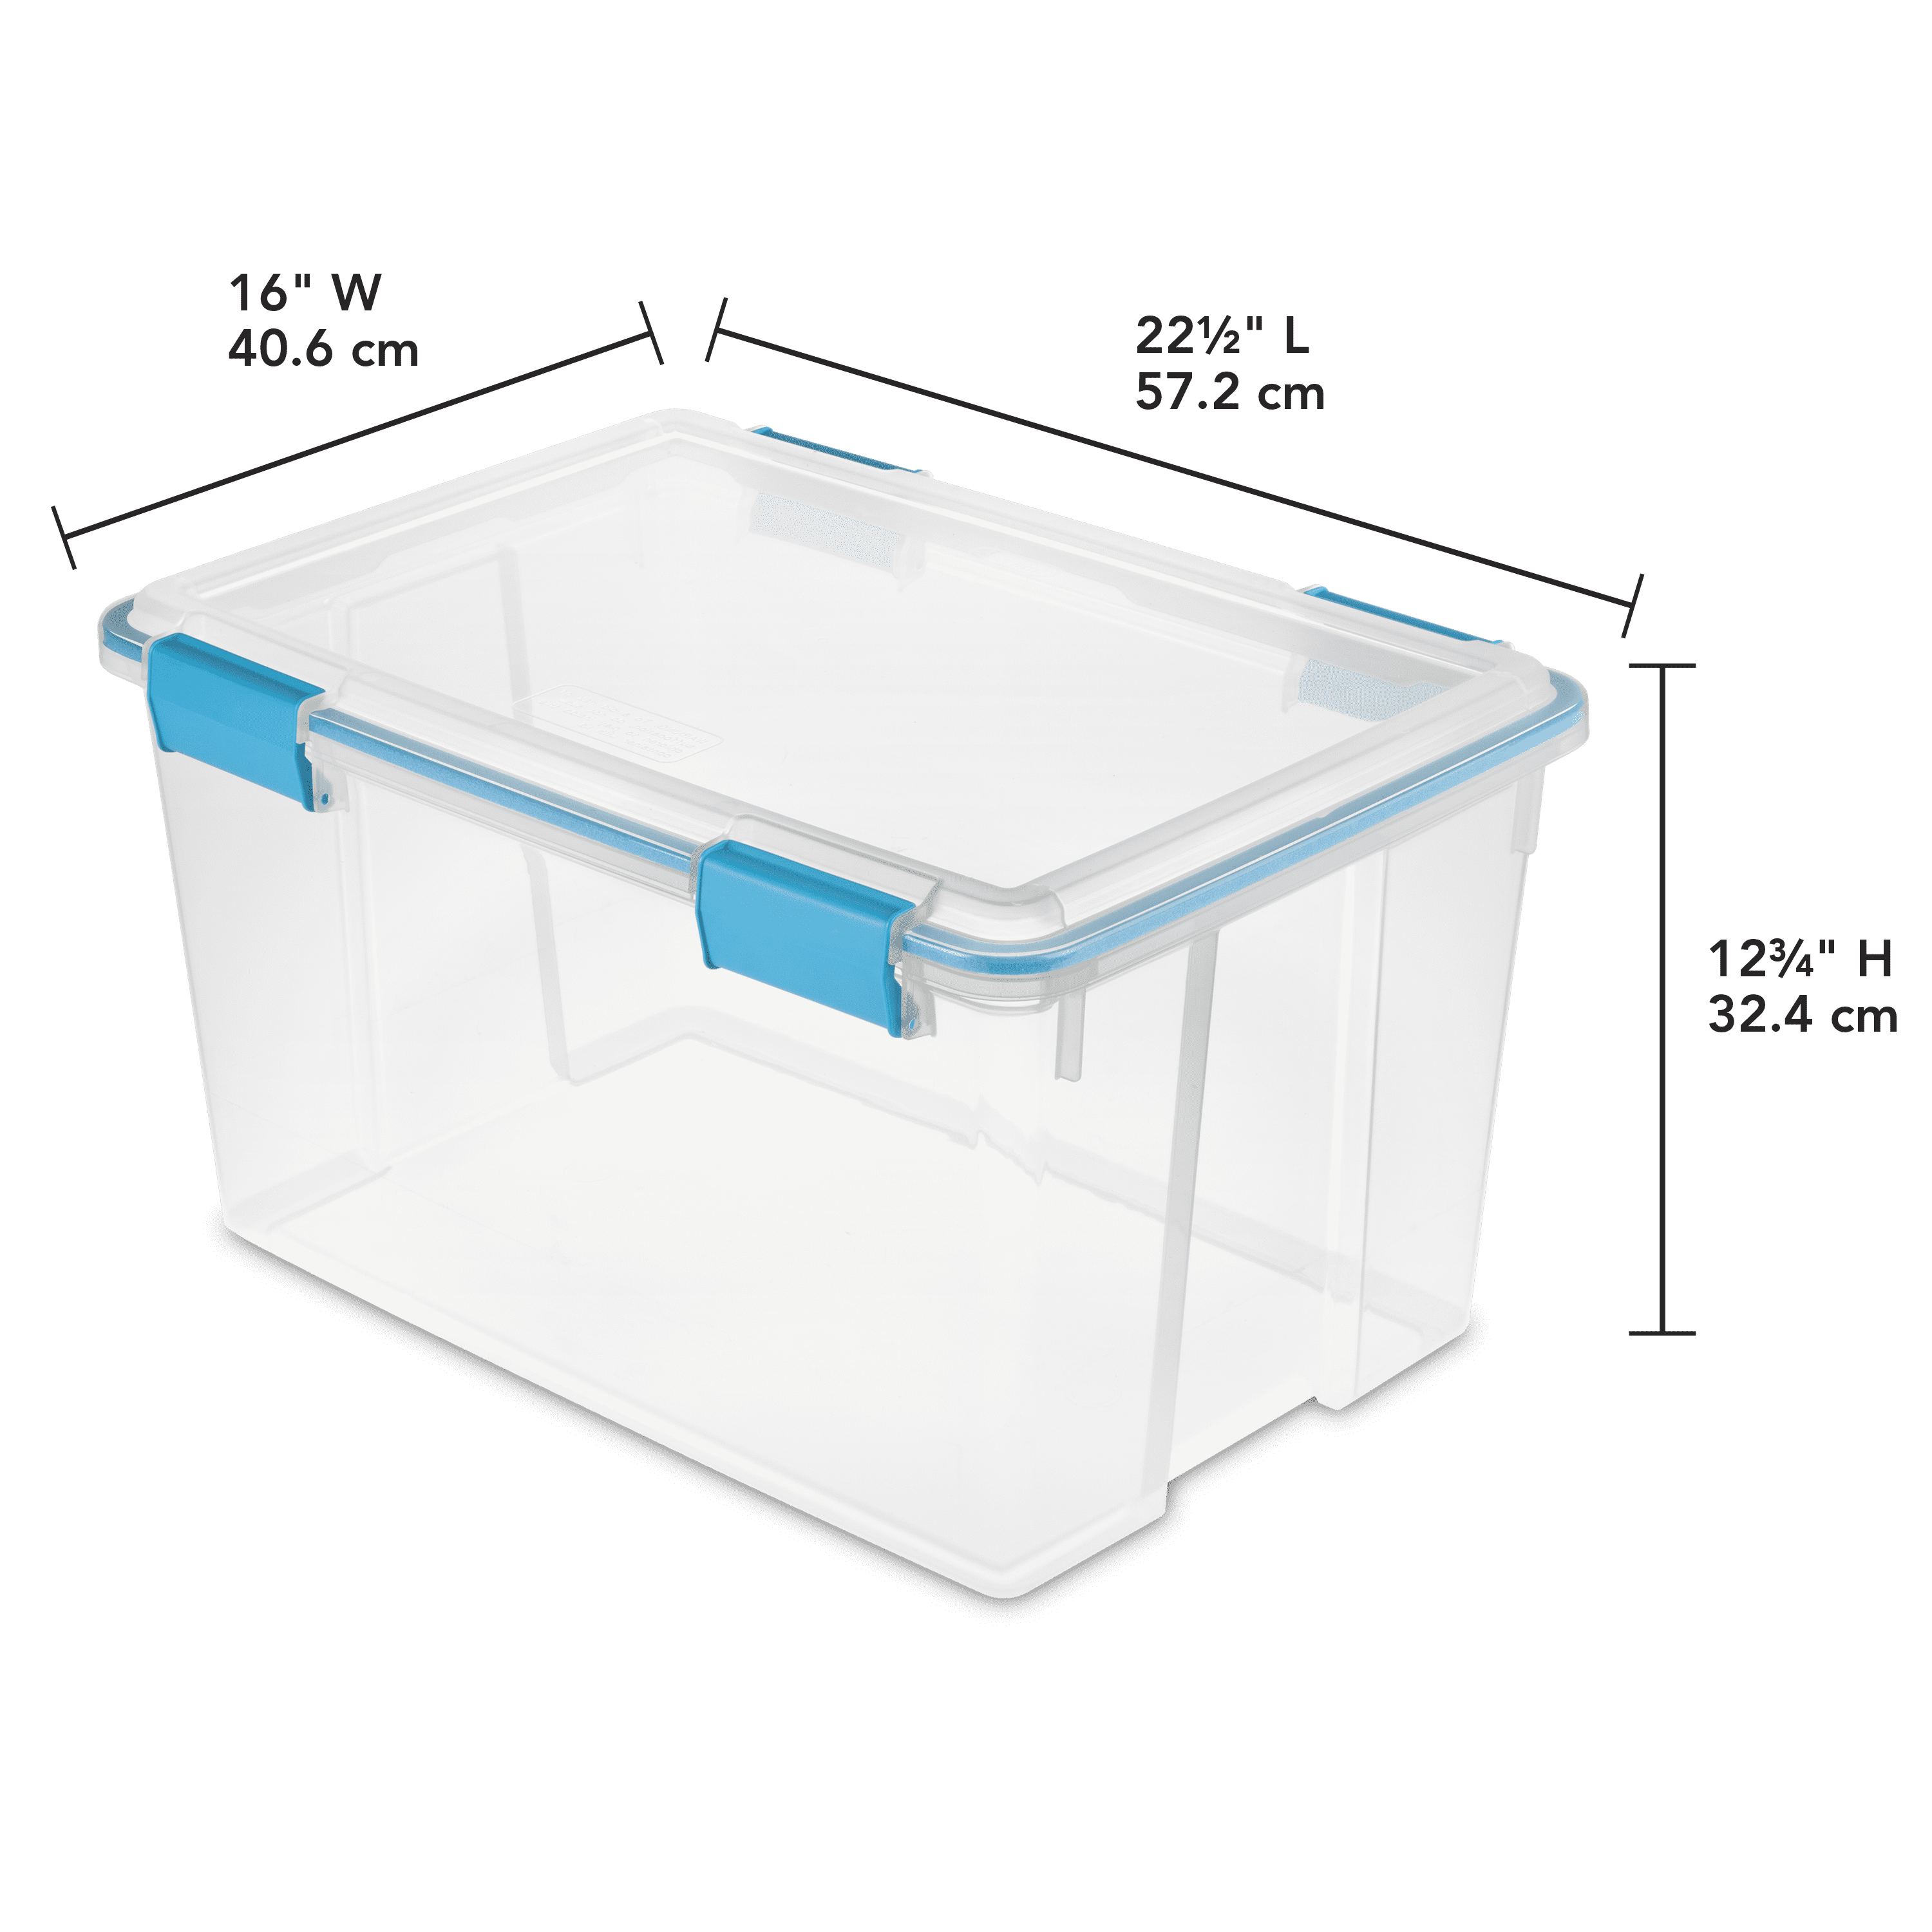 Wholesale Sterilite Storage Box W/ Lid- 54qt- Clear CLEARwBLUE LATCHES